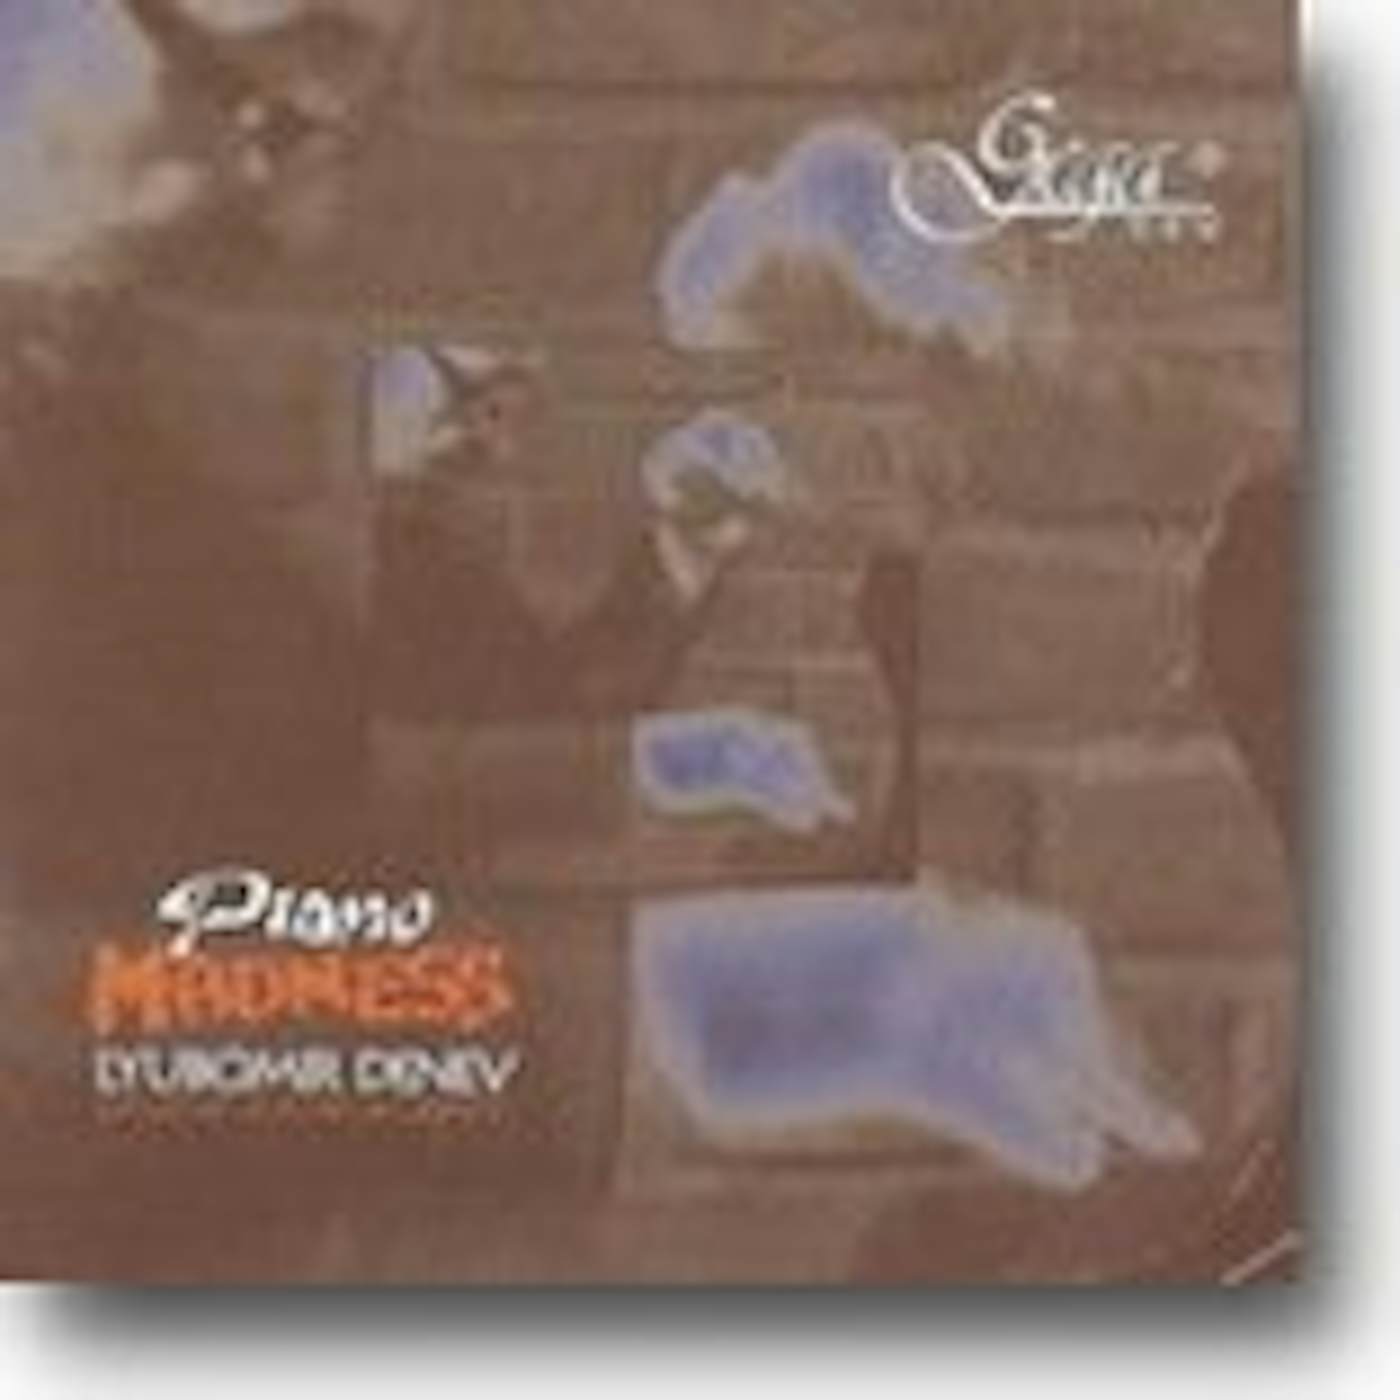 Frédéric Chopin PIANO MADNESS CD